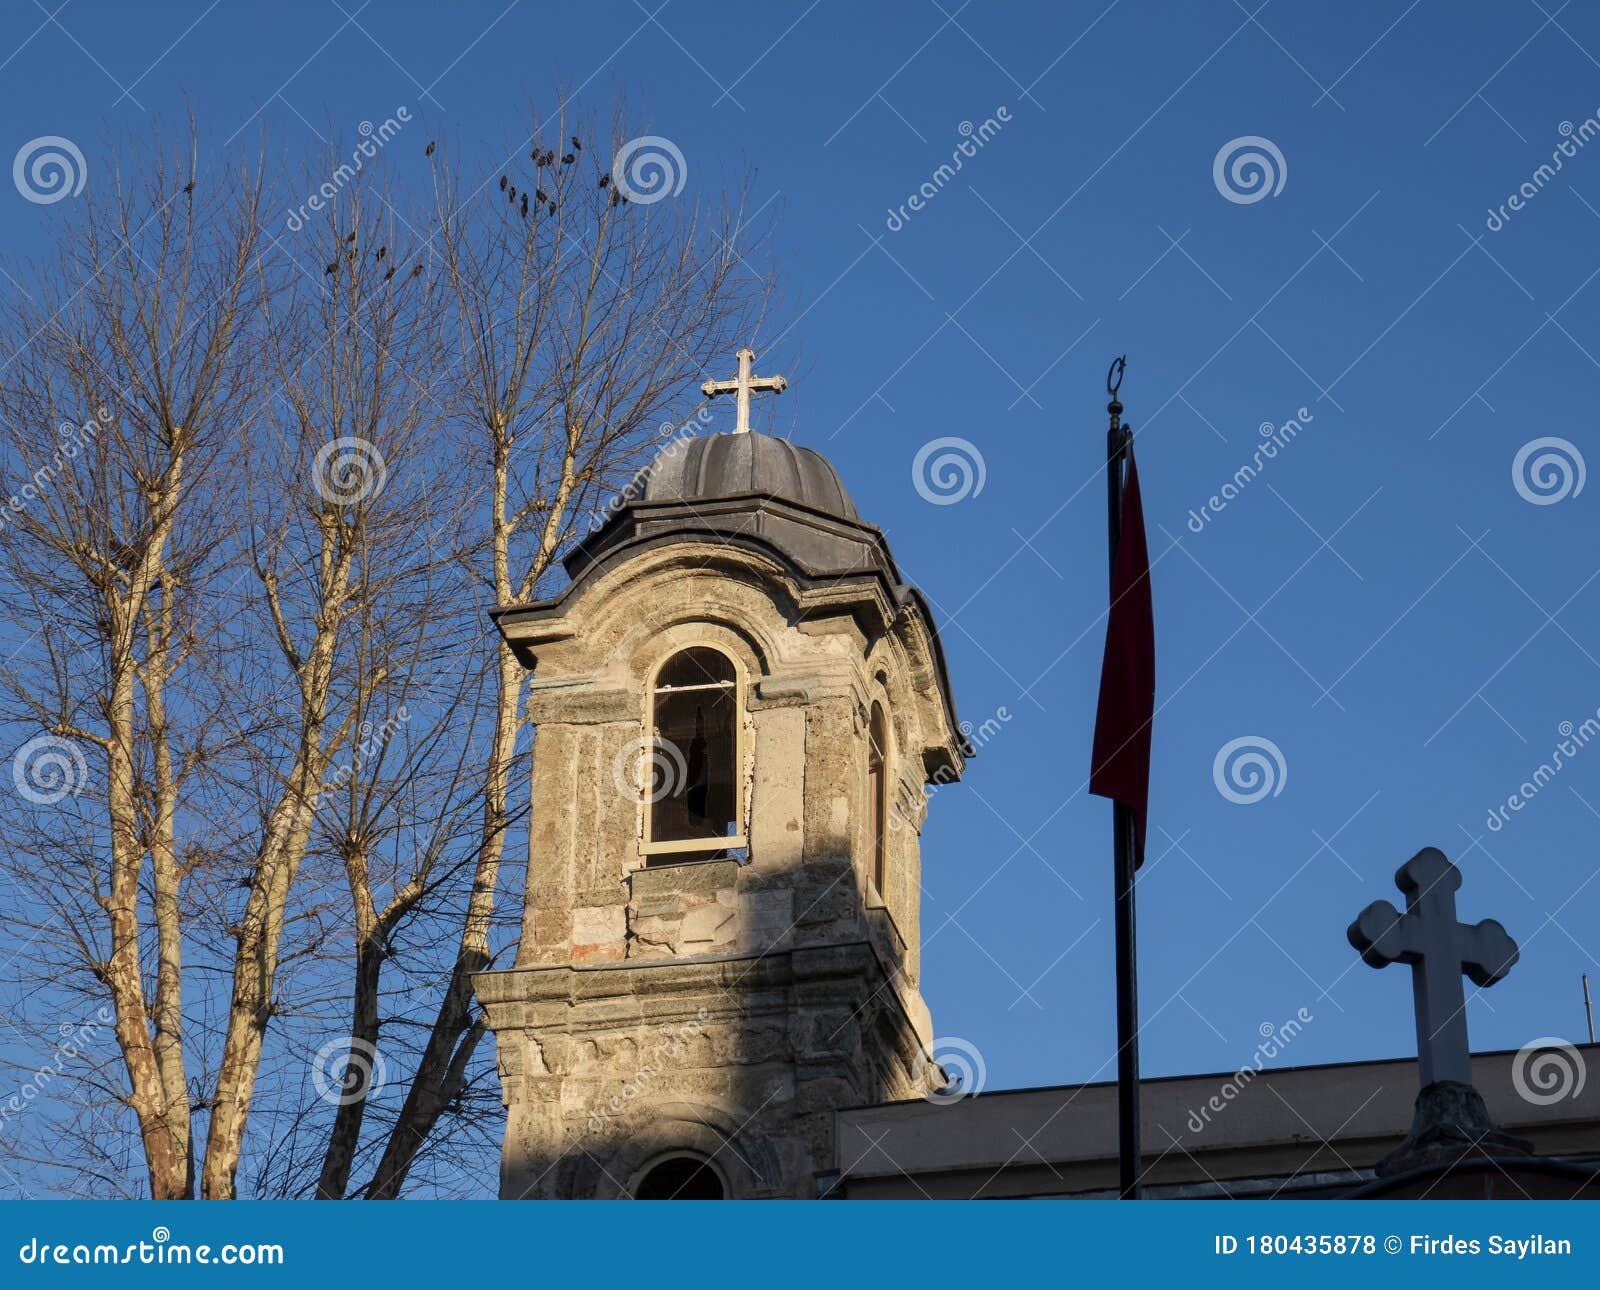 ayia efimia greek orthodox church, kadikoy. istanbu,turkey